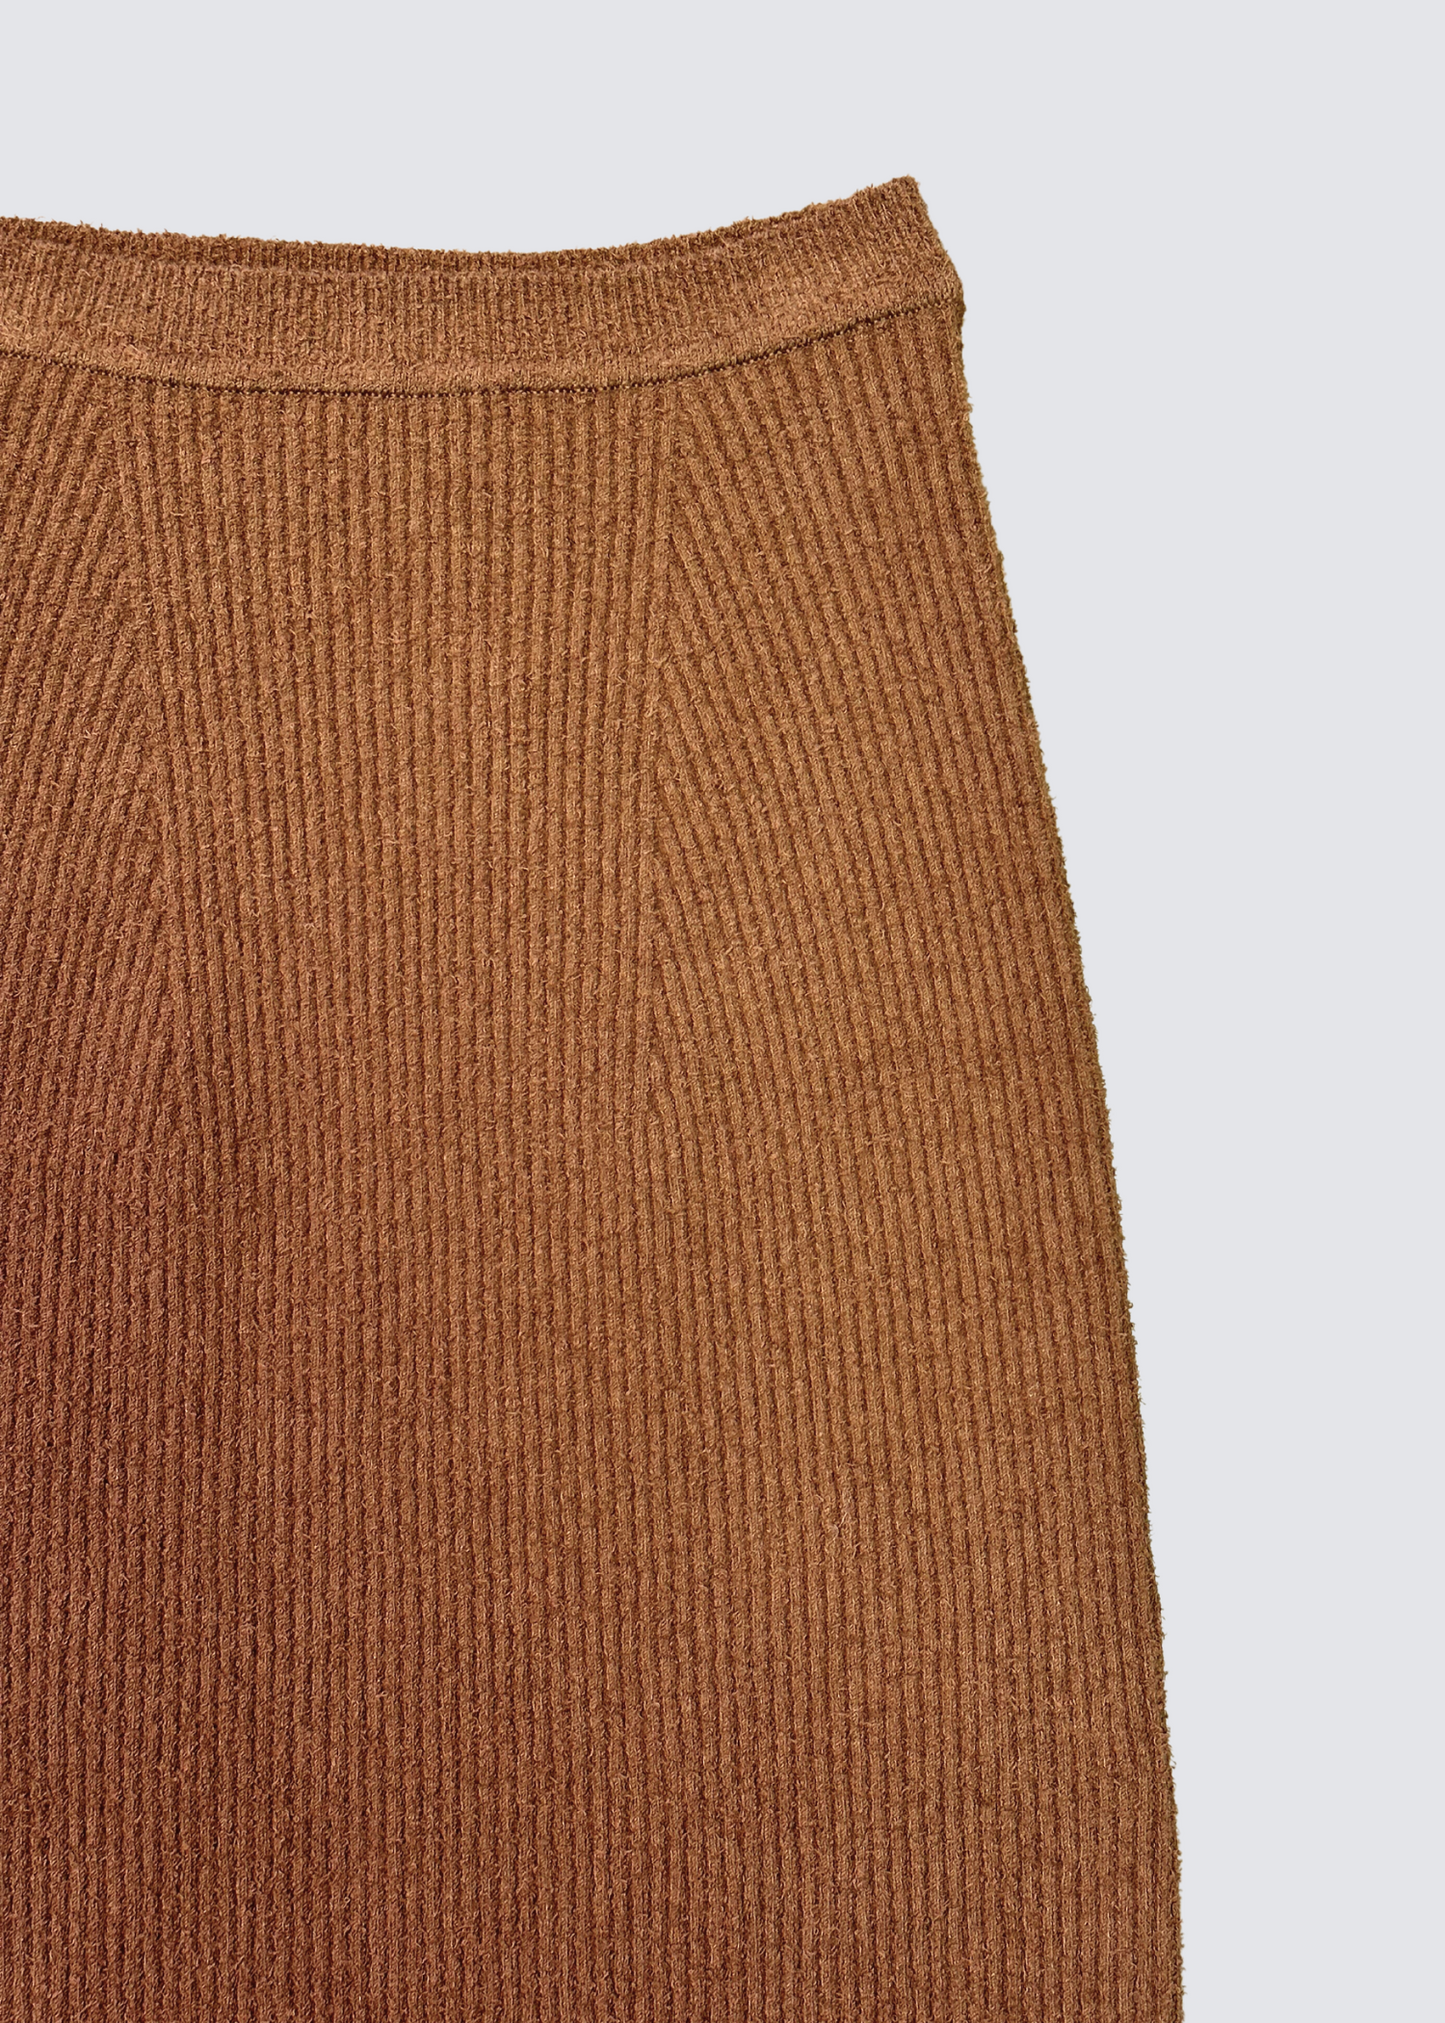 Knit, Brown, Midi Skirt